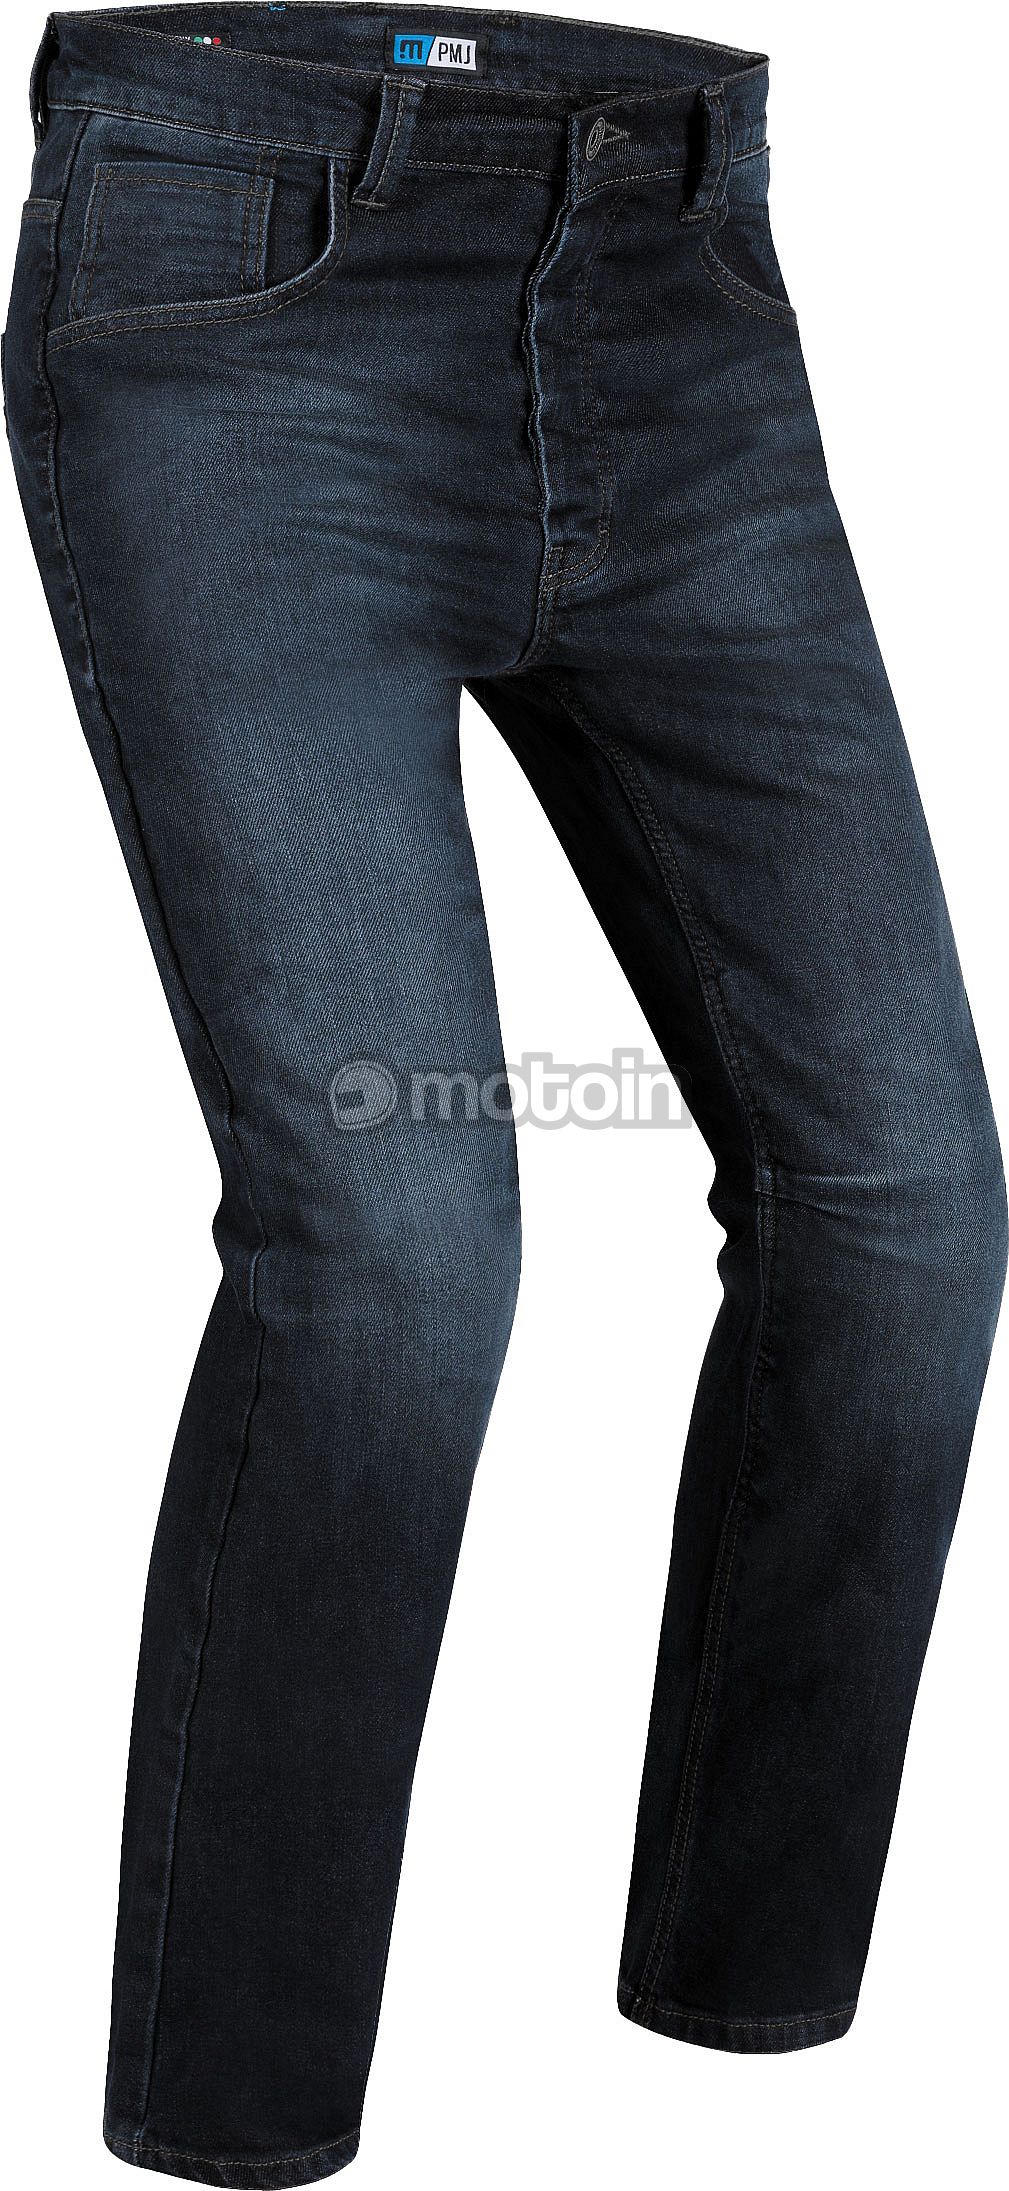 PMJ Jefferson Comfort, jeans